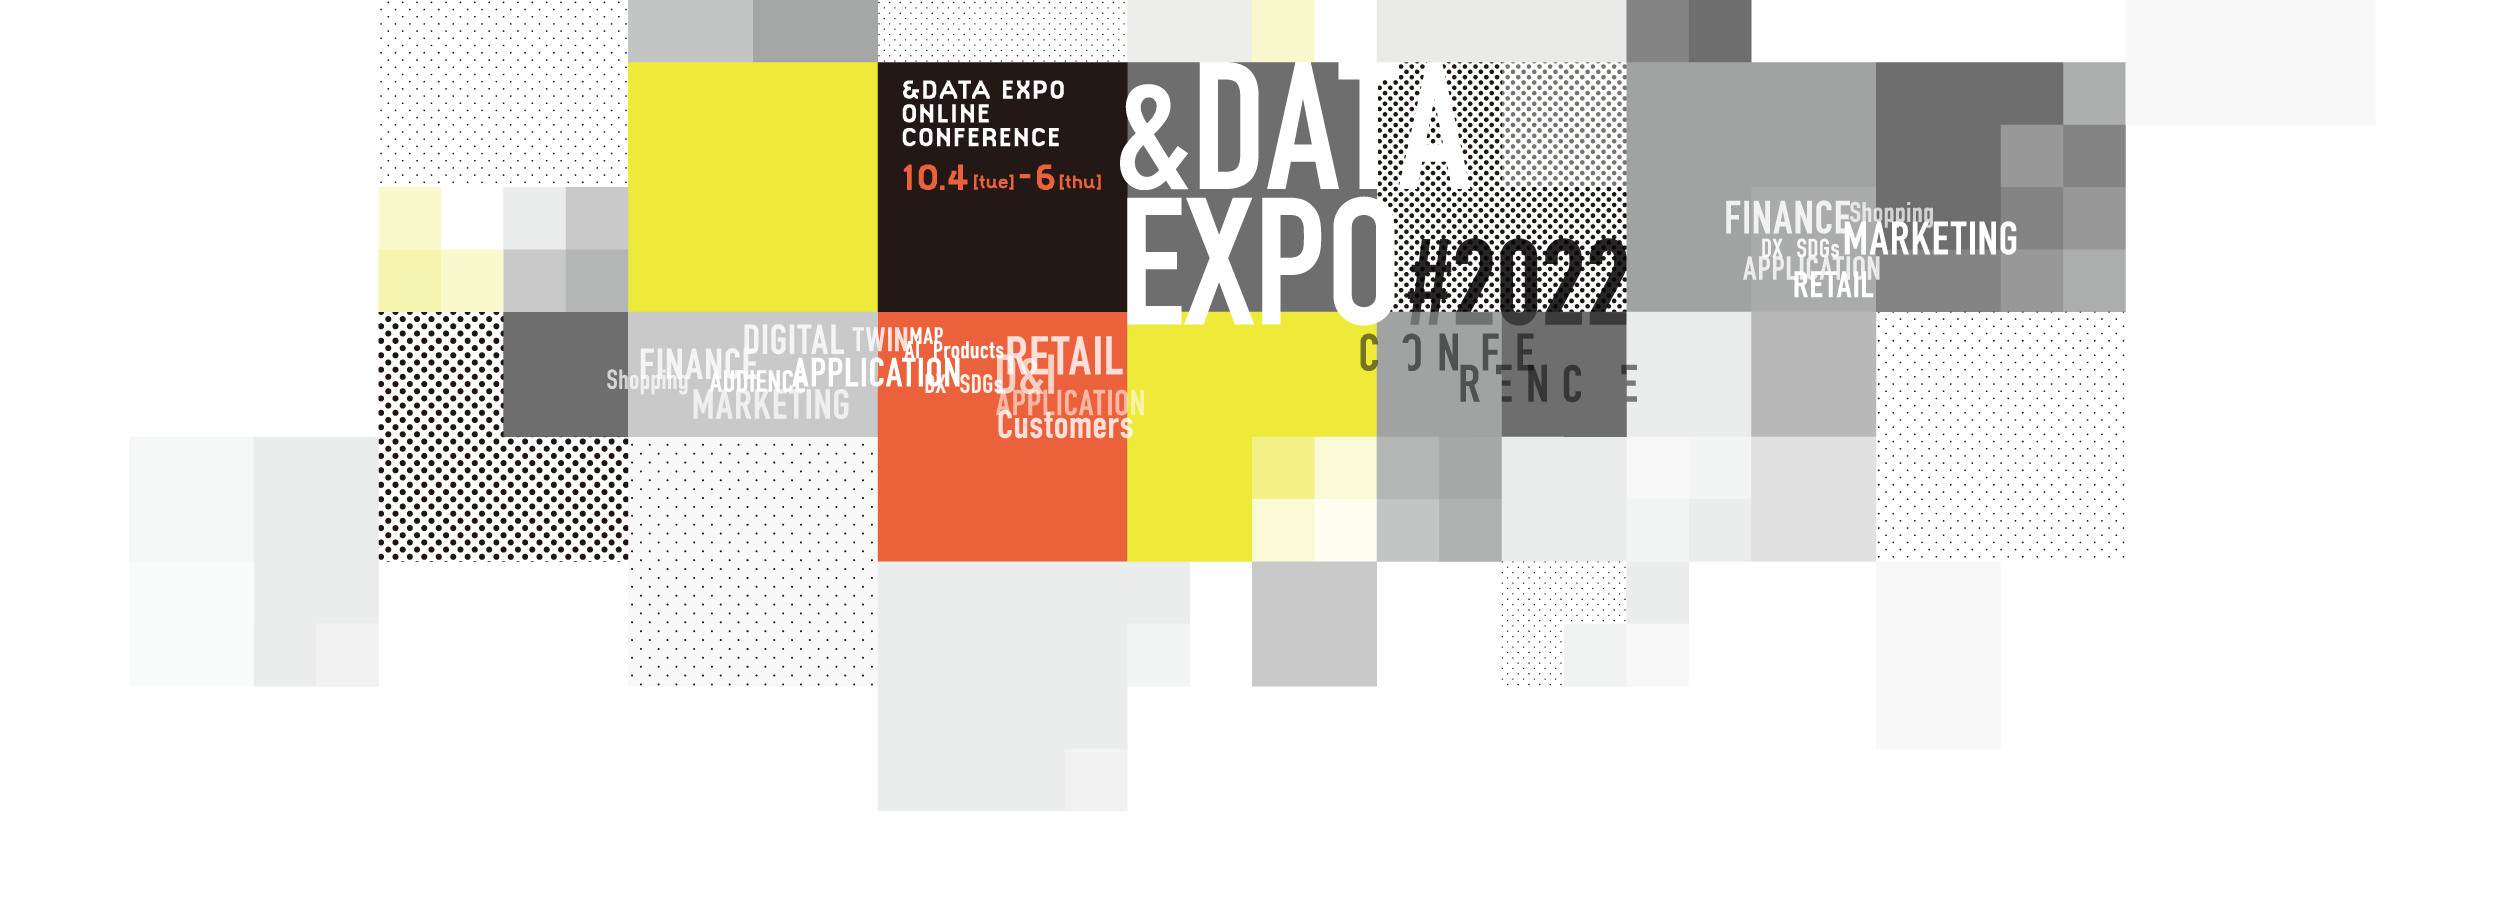 &DATA EXPO